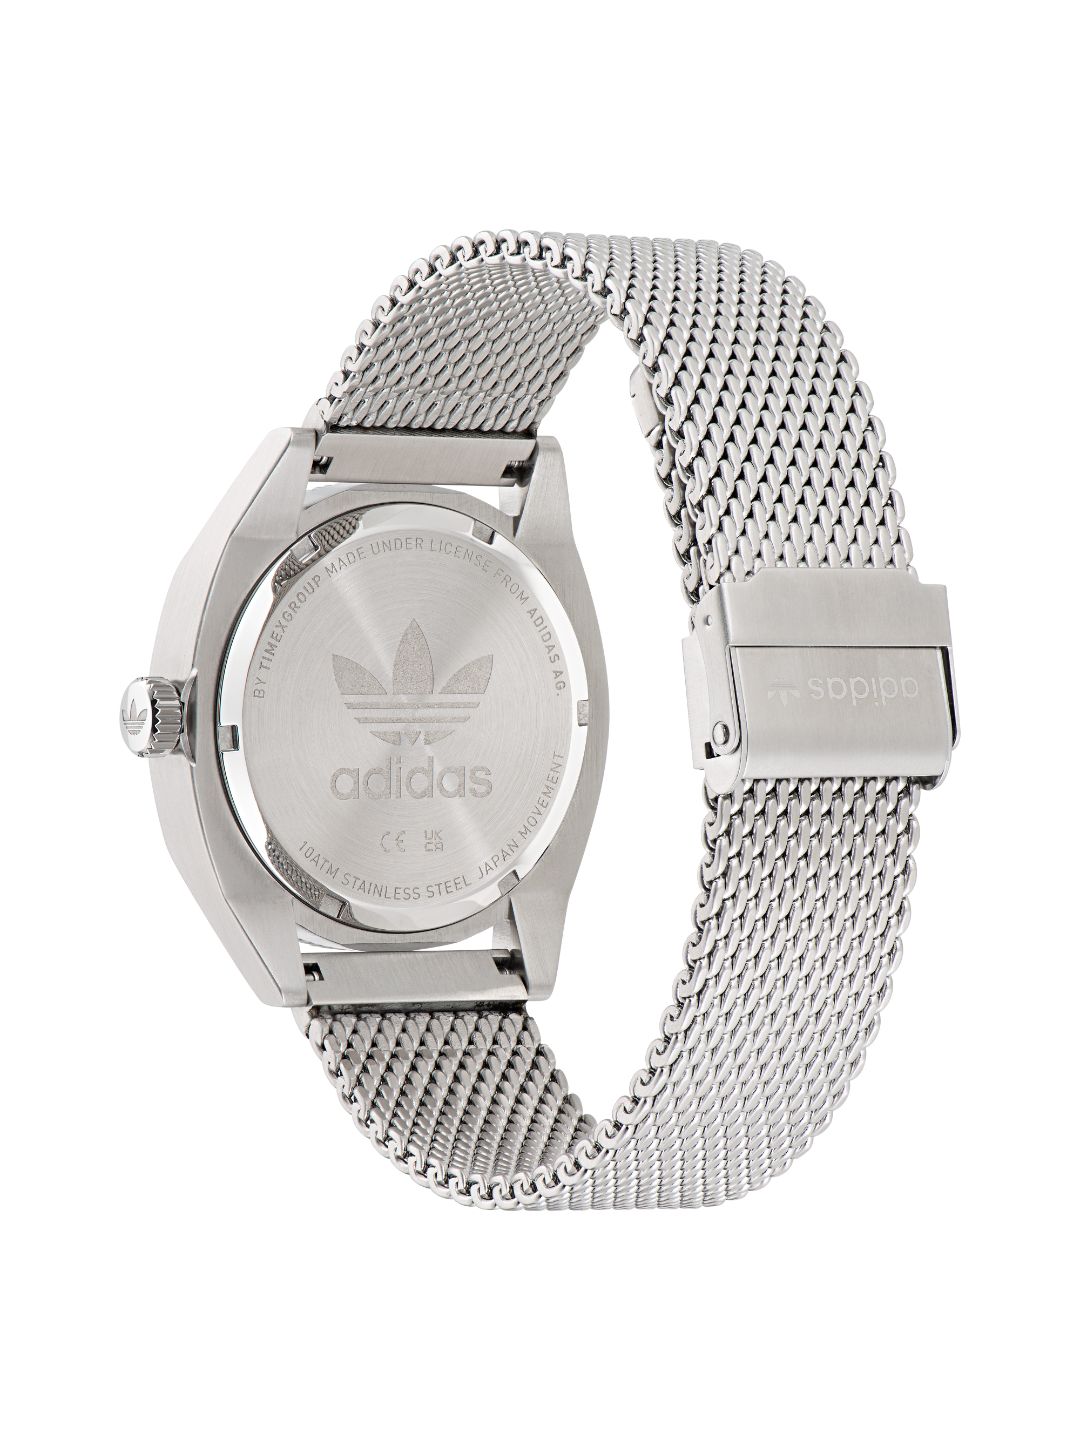 Adidas Originals Silver Dial Unisex Watch - AOFH22503